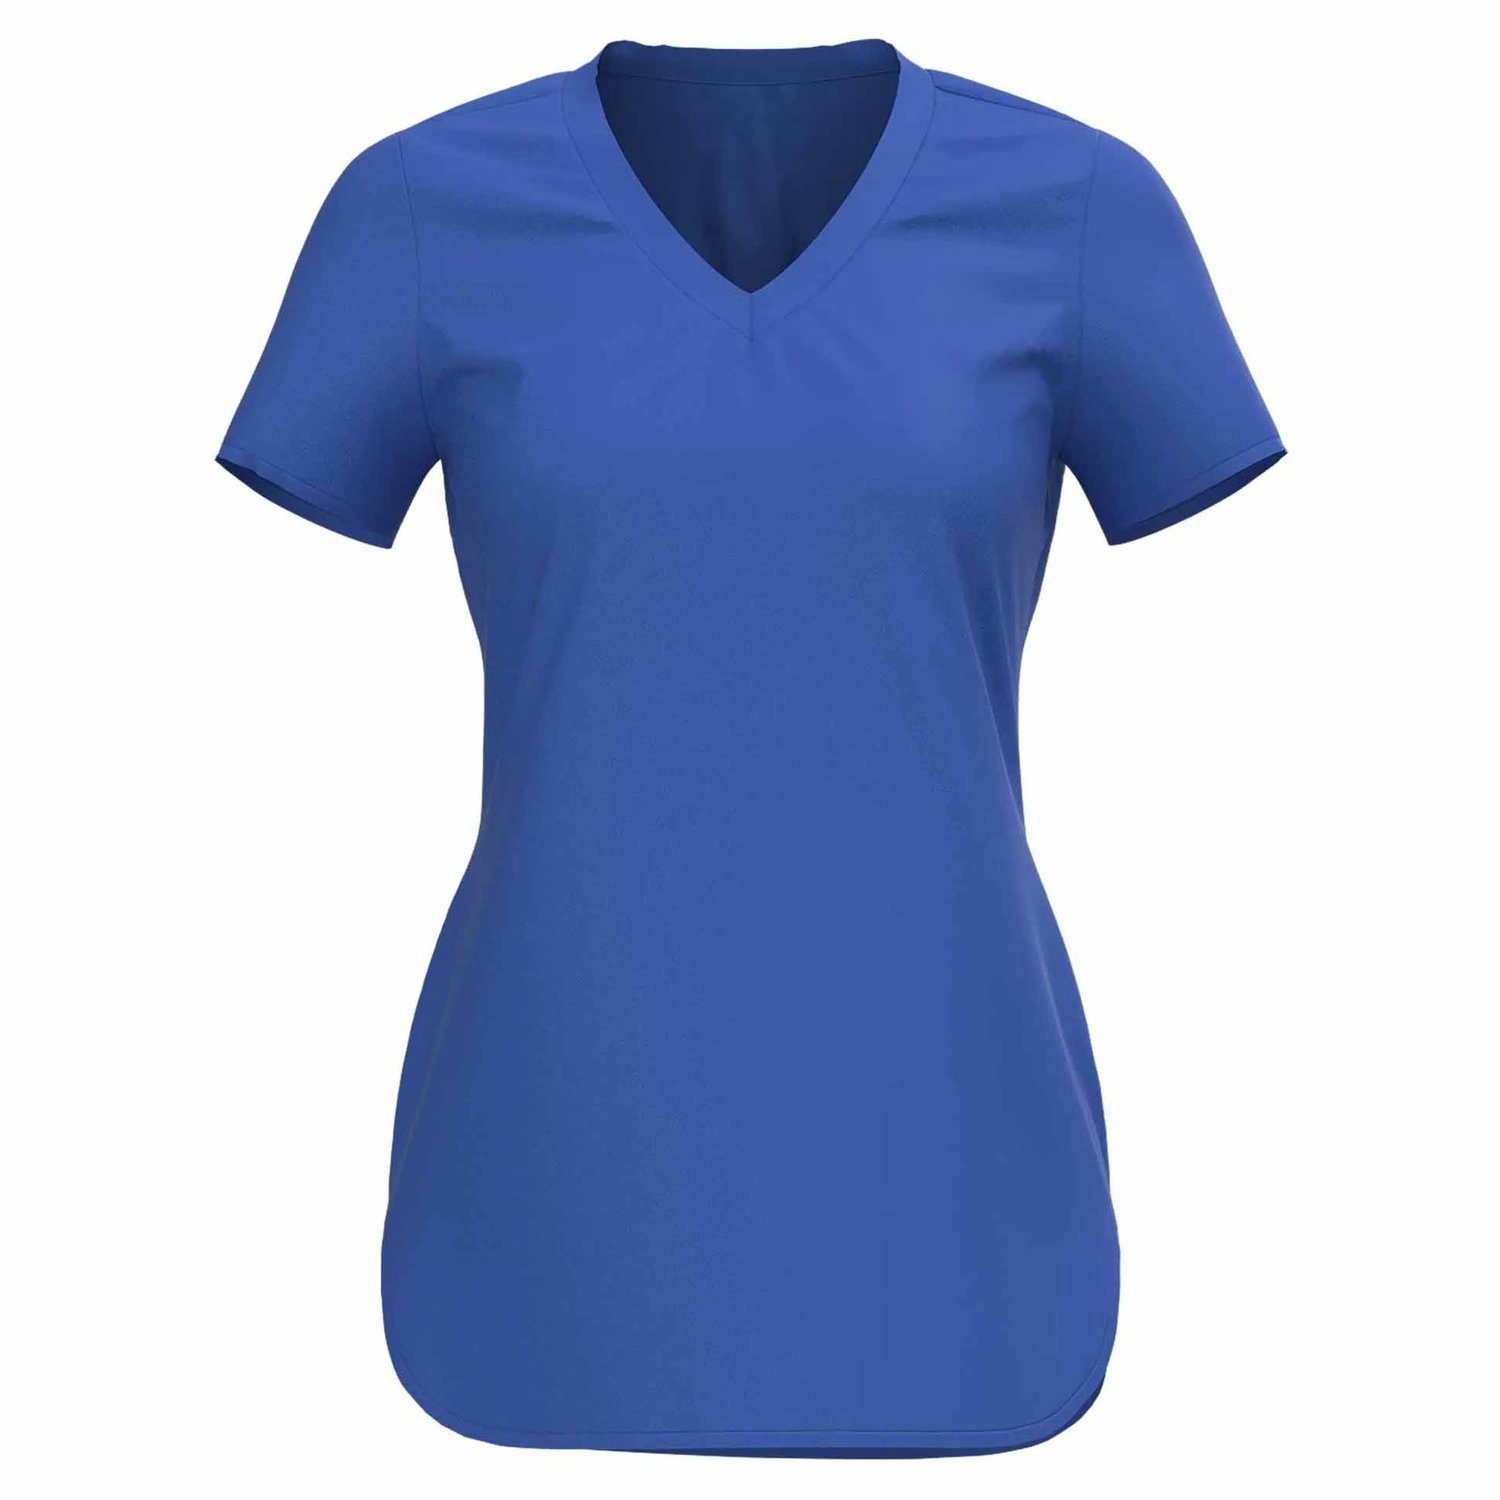 Camisas para exercícios Camisa superior feminina Angola